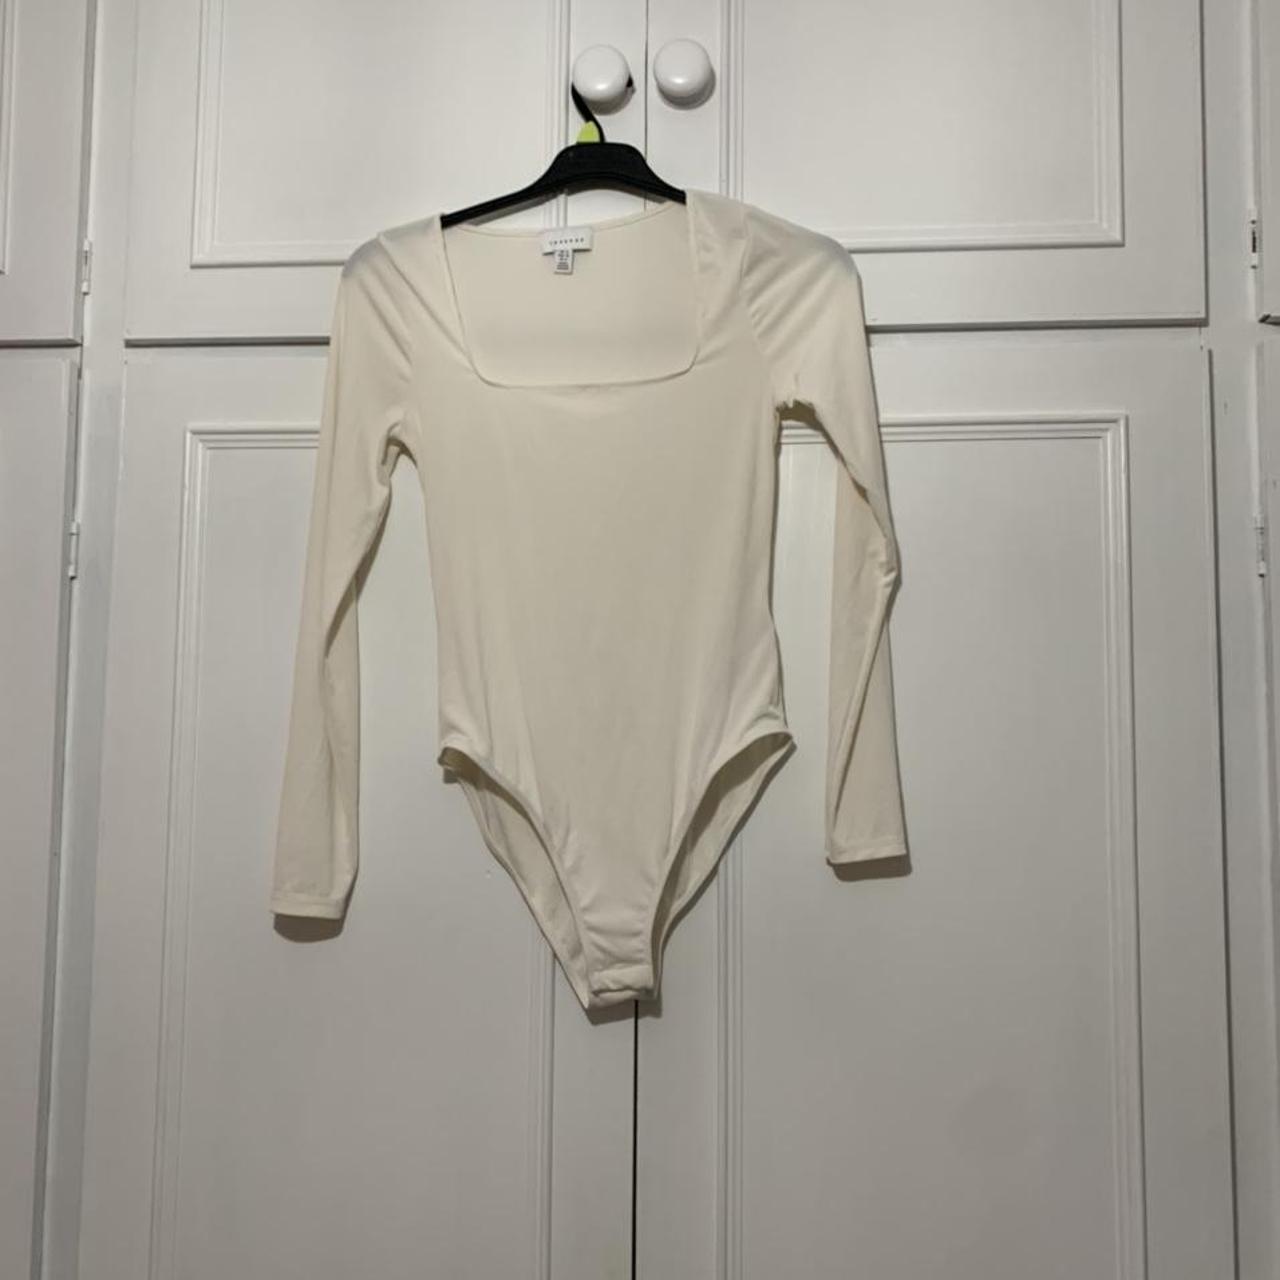 Mooslover bodysuit in shade beige/off white. Gorge - Depop